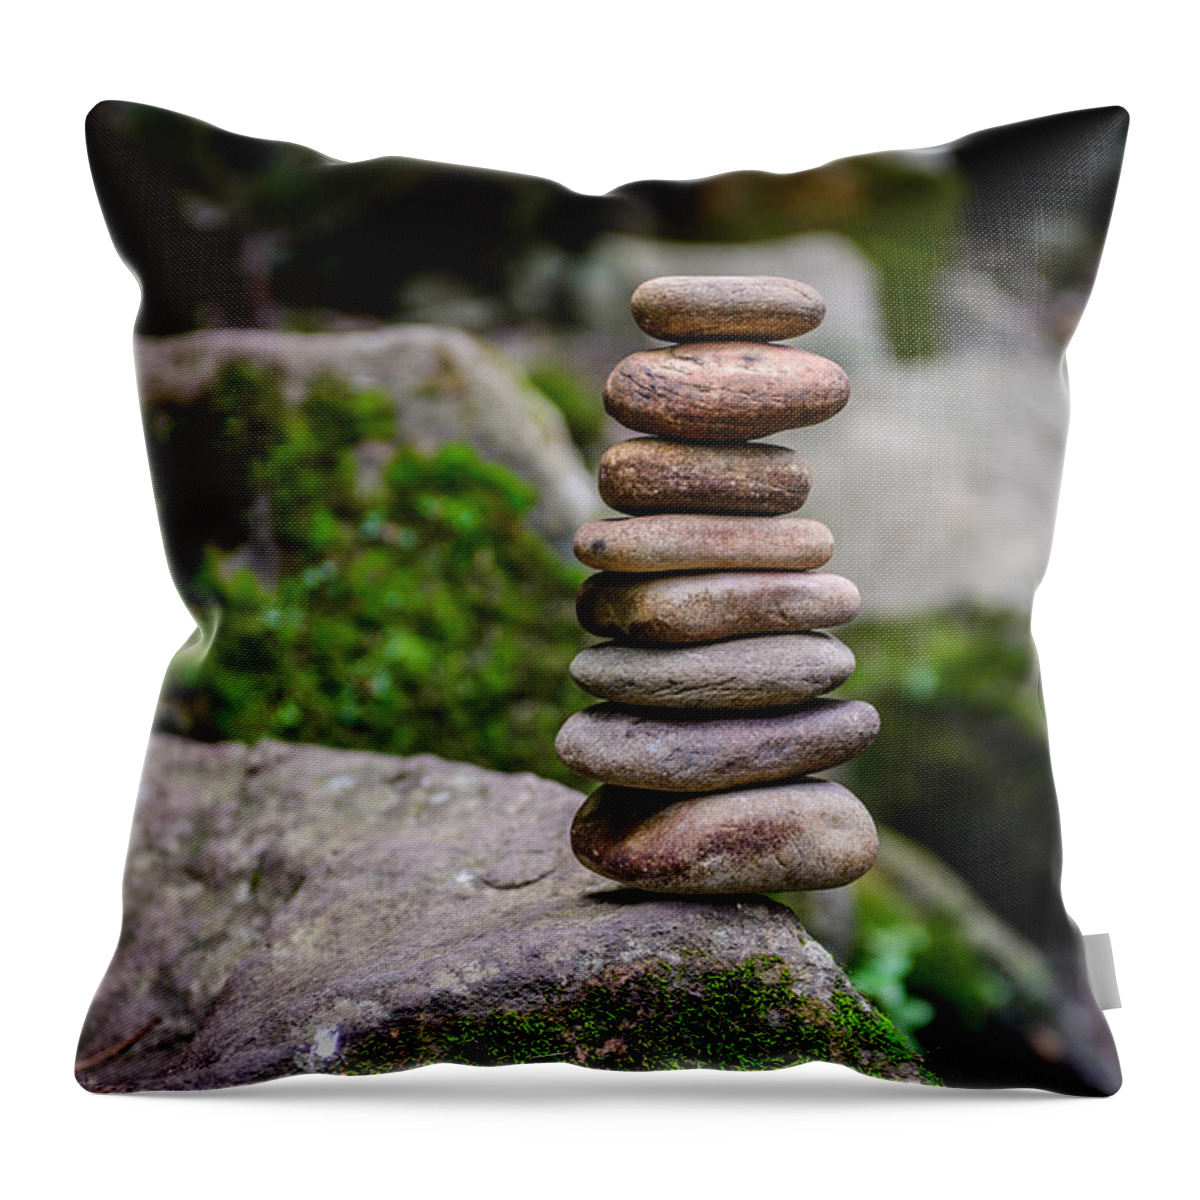 Zen Stones Throw Pillow featuring the photograph Balancing Zen Stones by Marco Oliveira